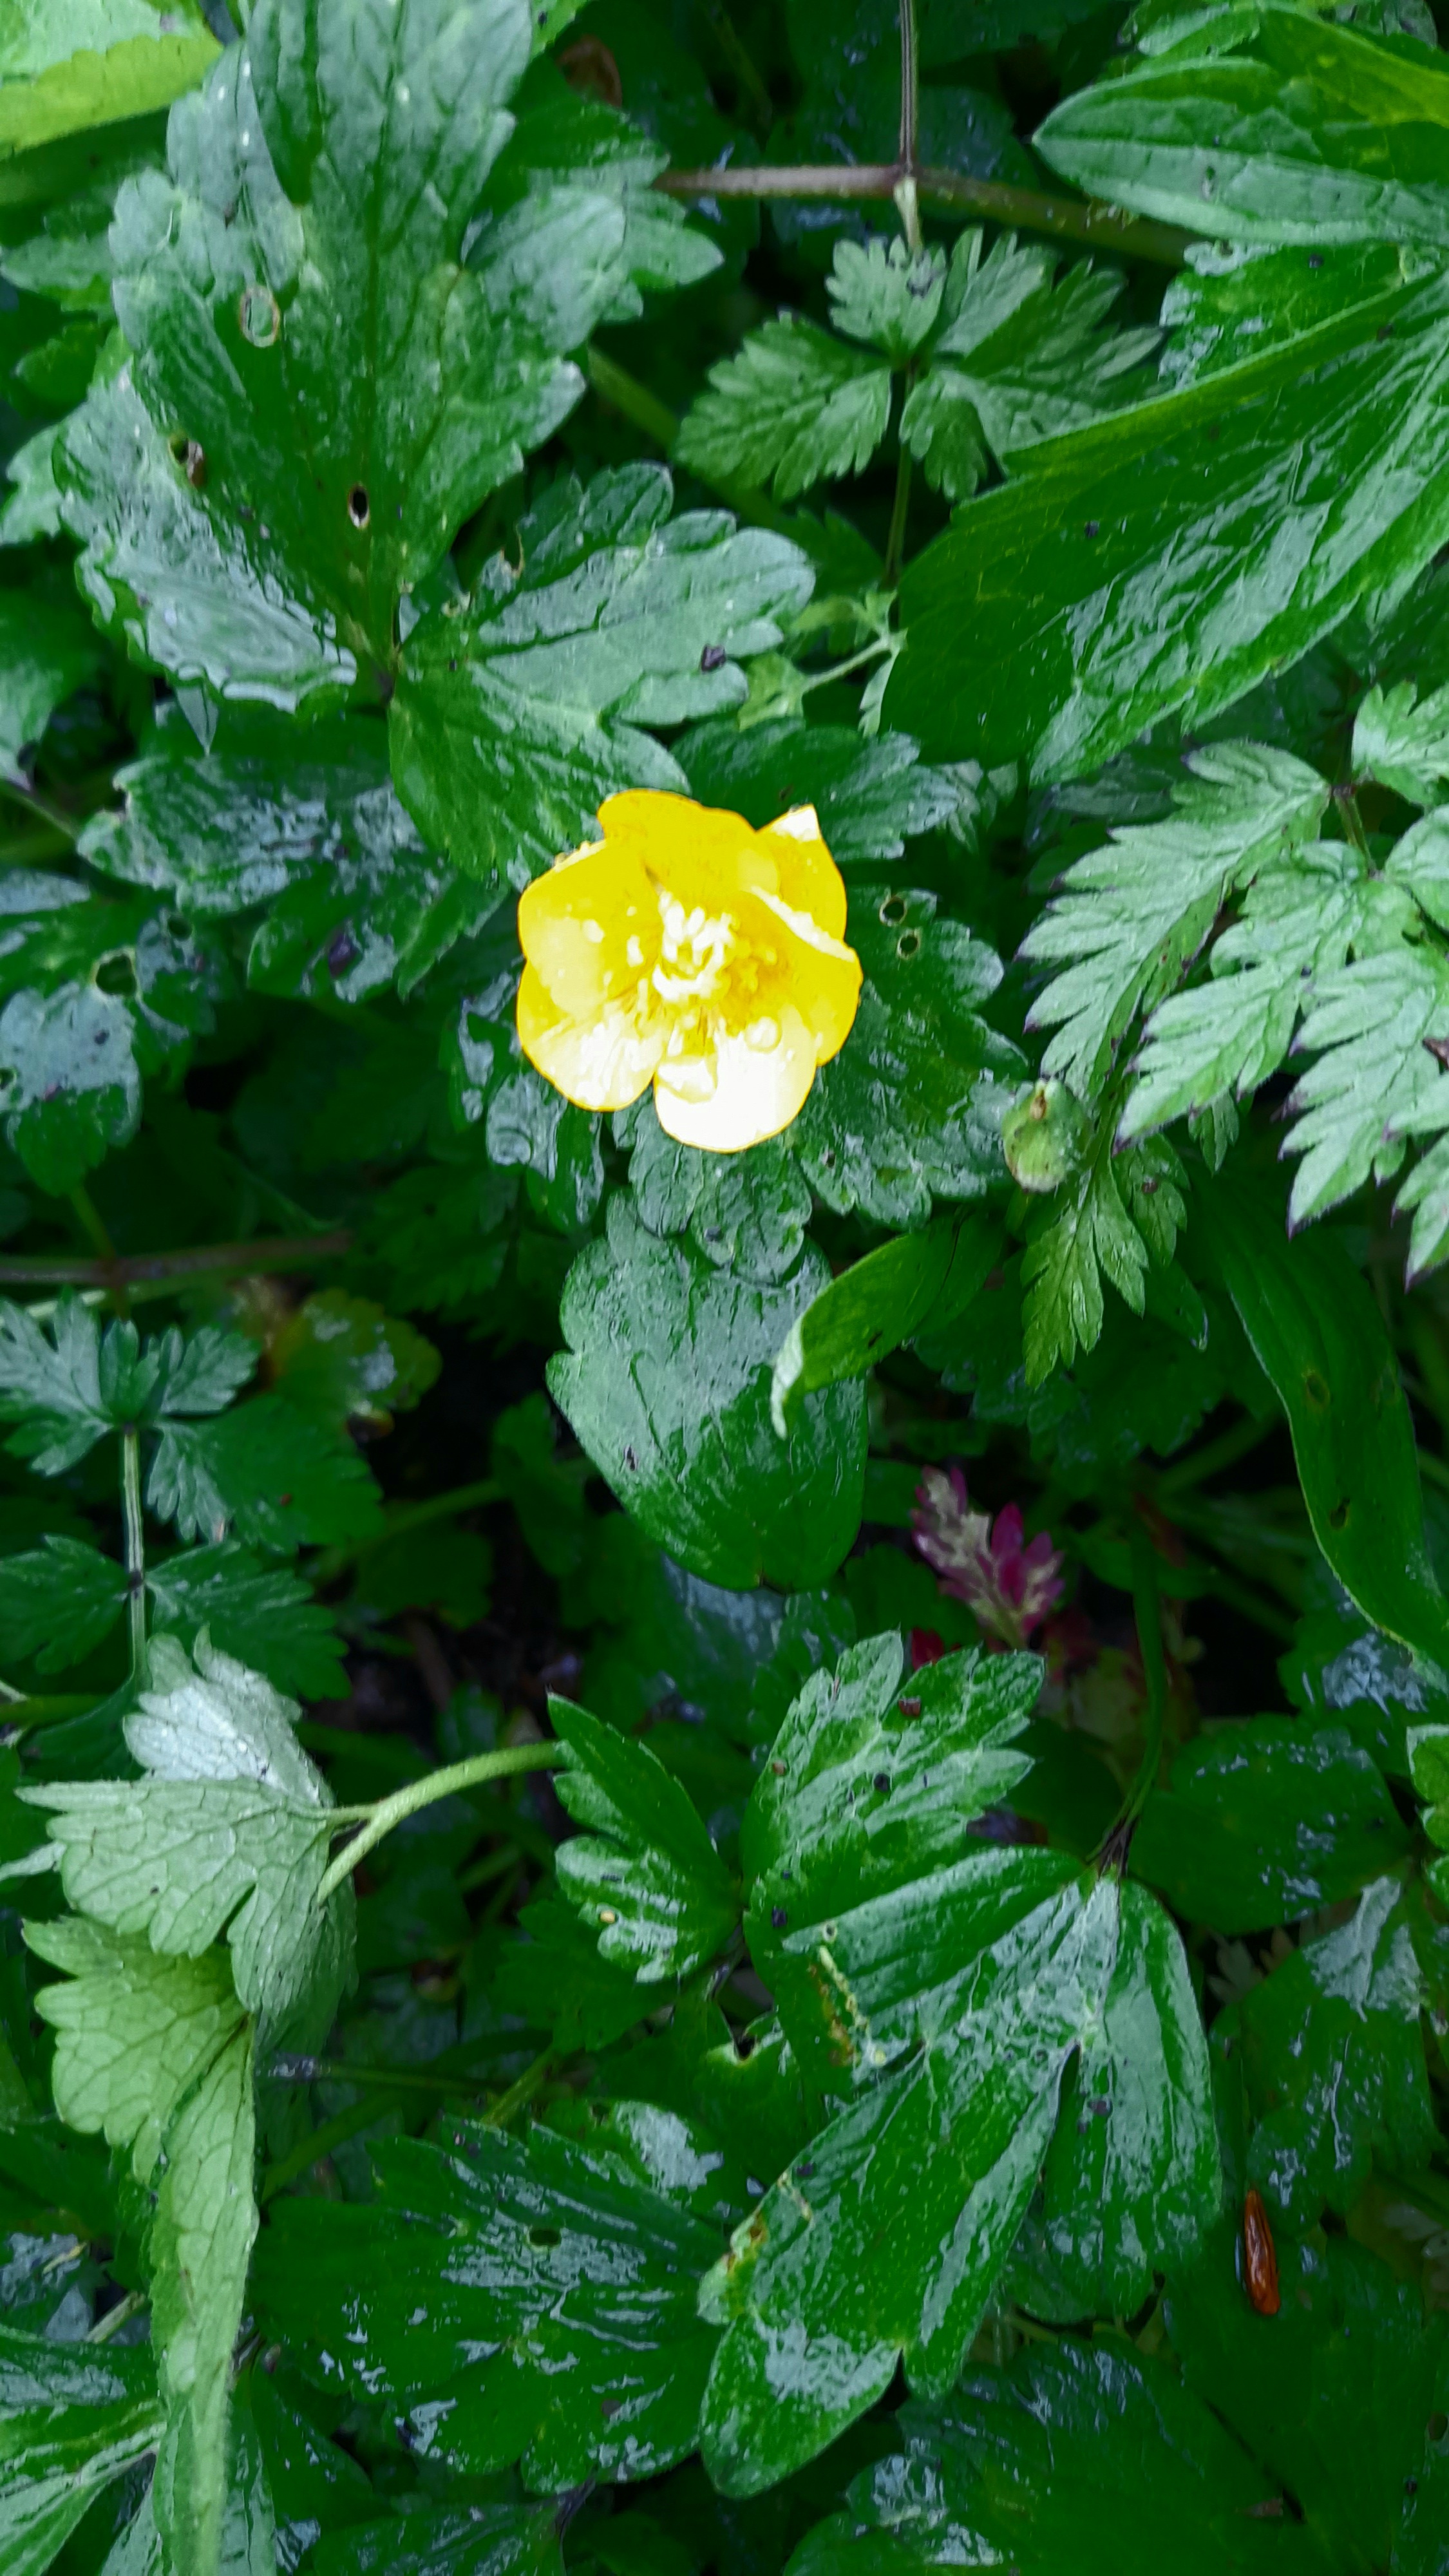 Close up of goldilocks buttercup flower